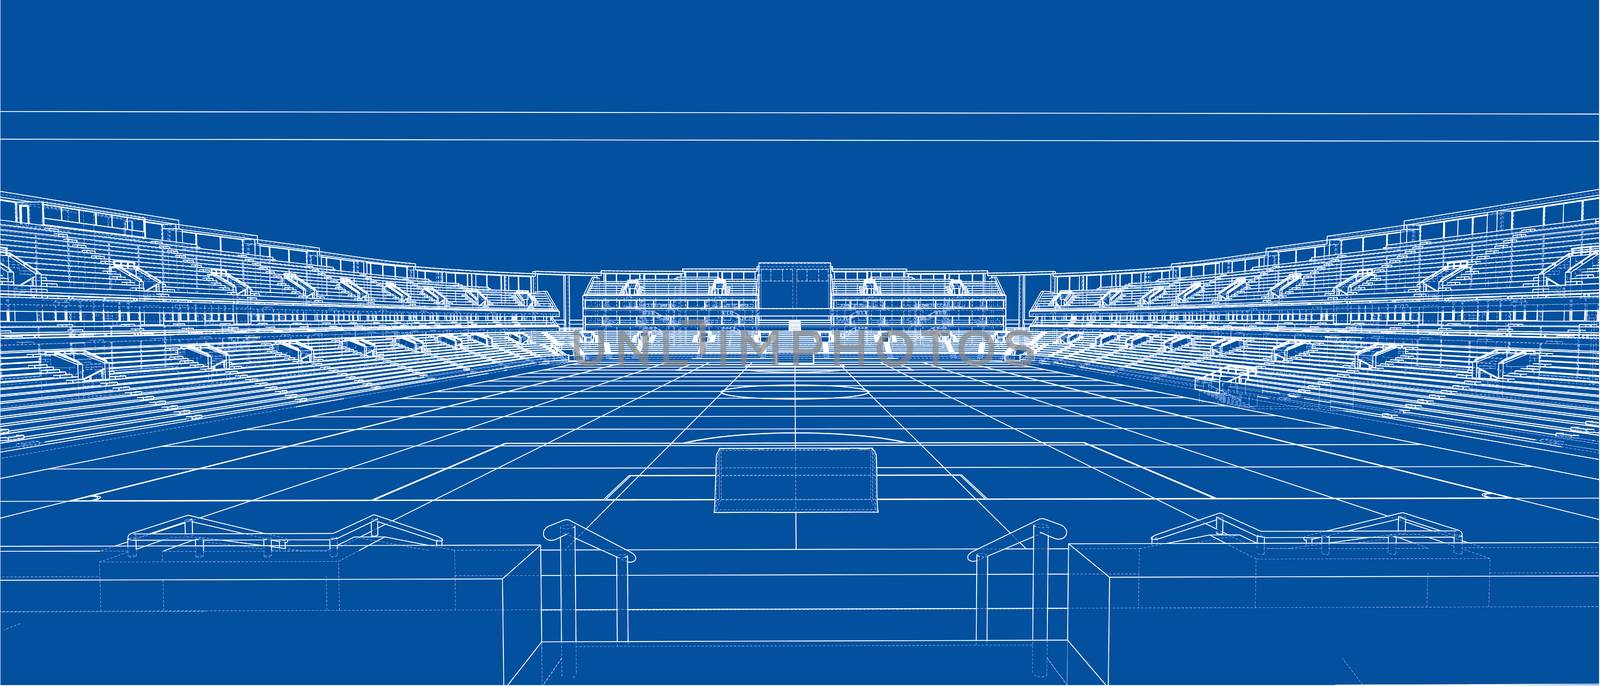 Sketch of Football stadium by cherezoff